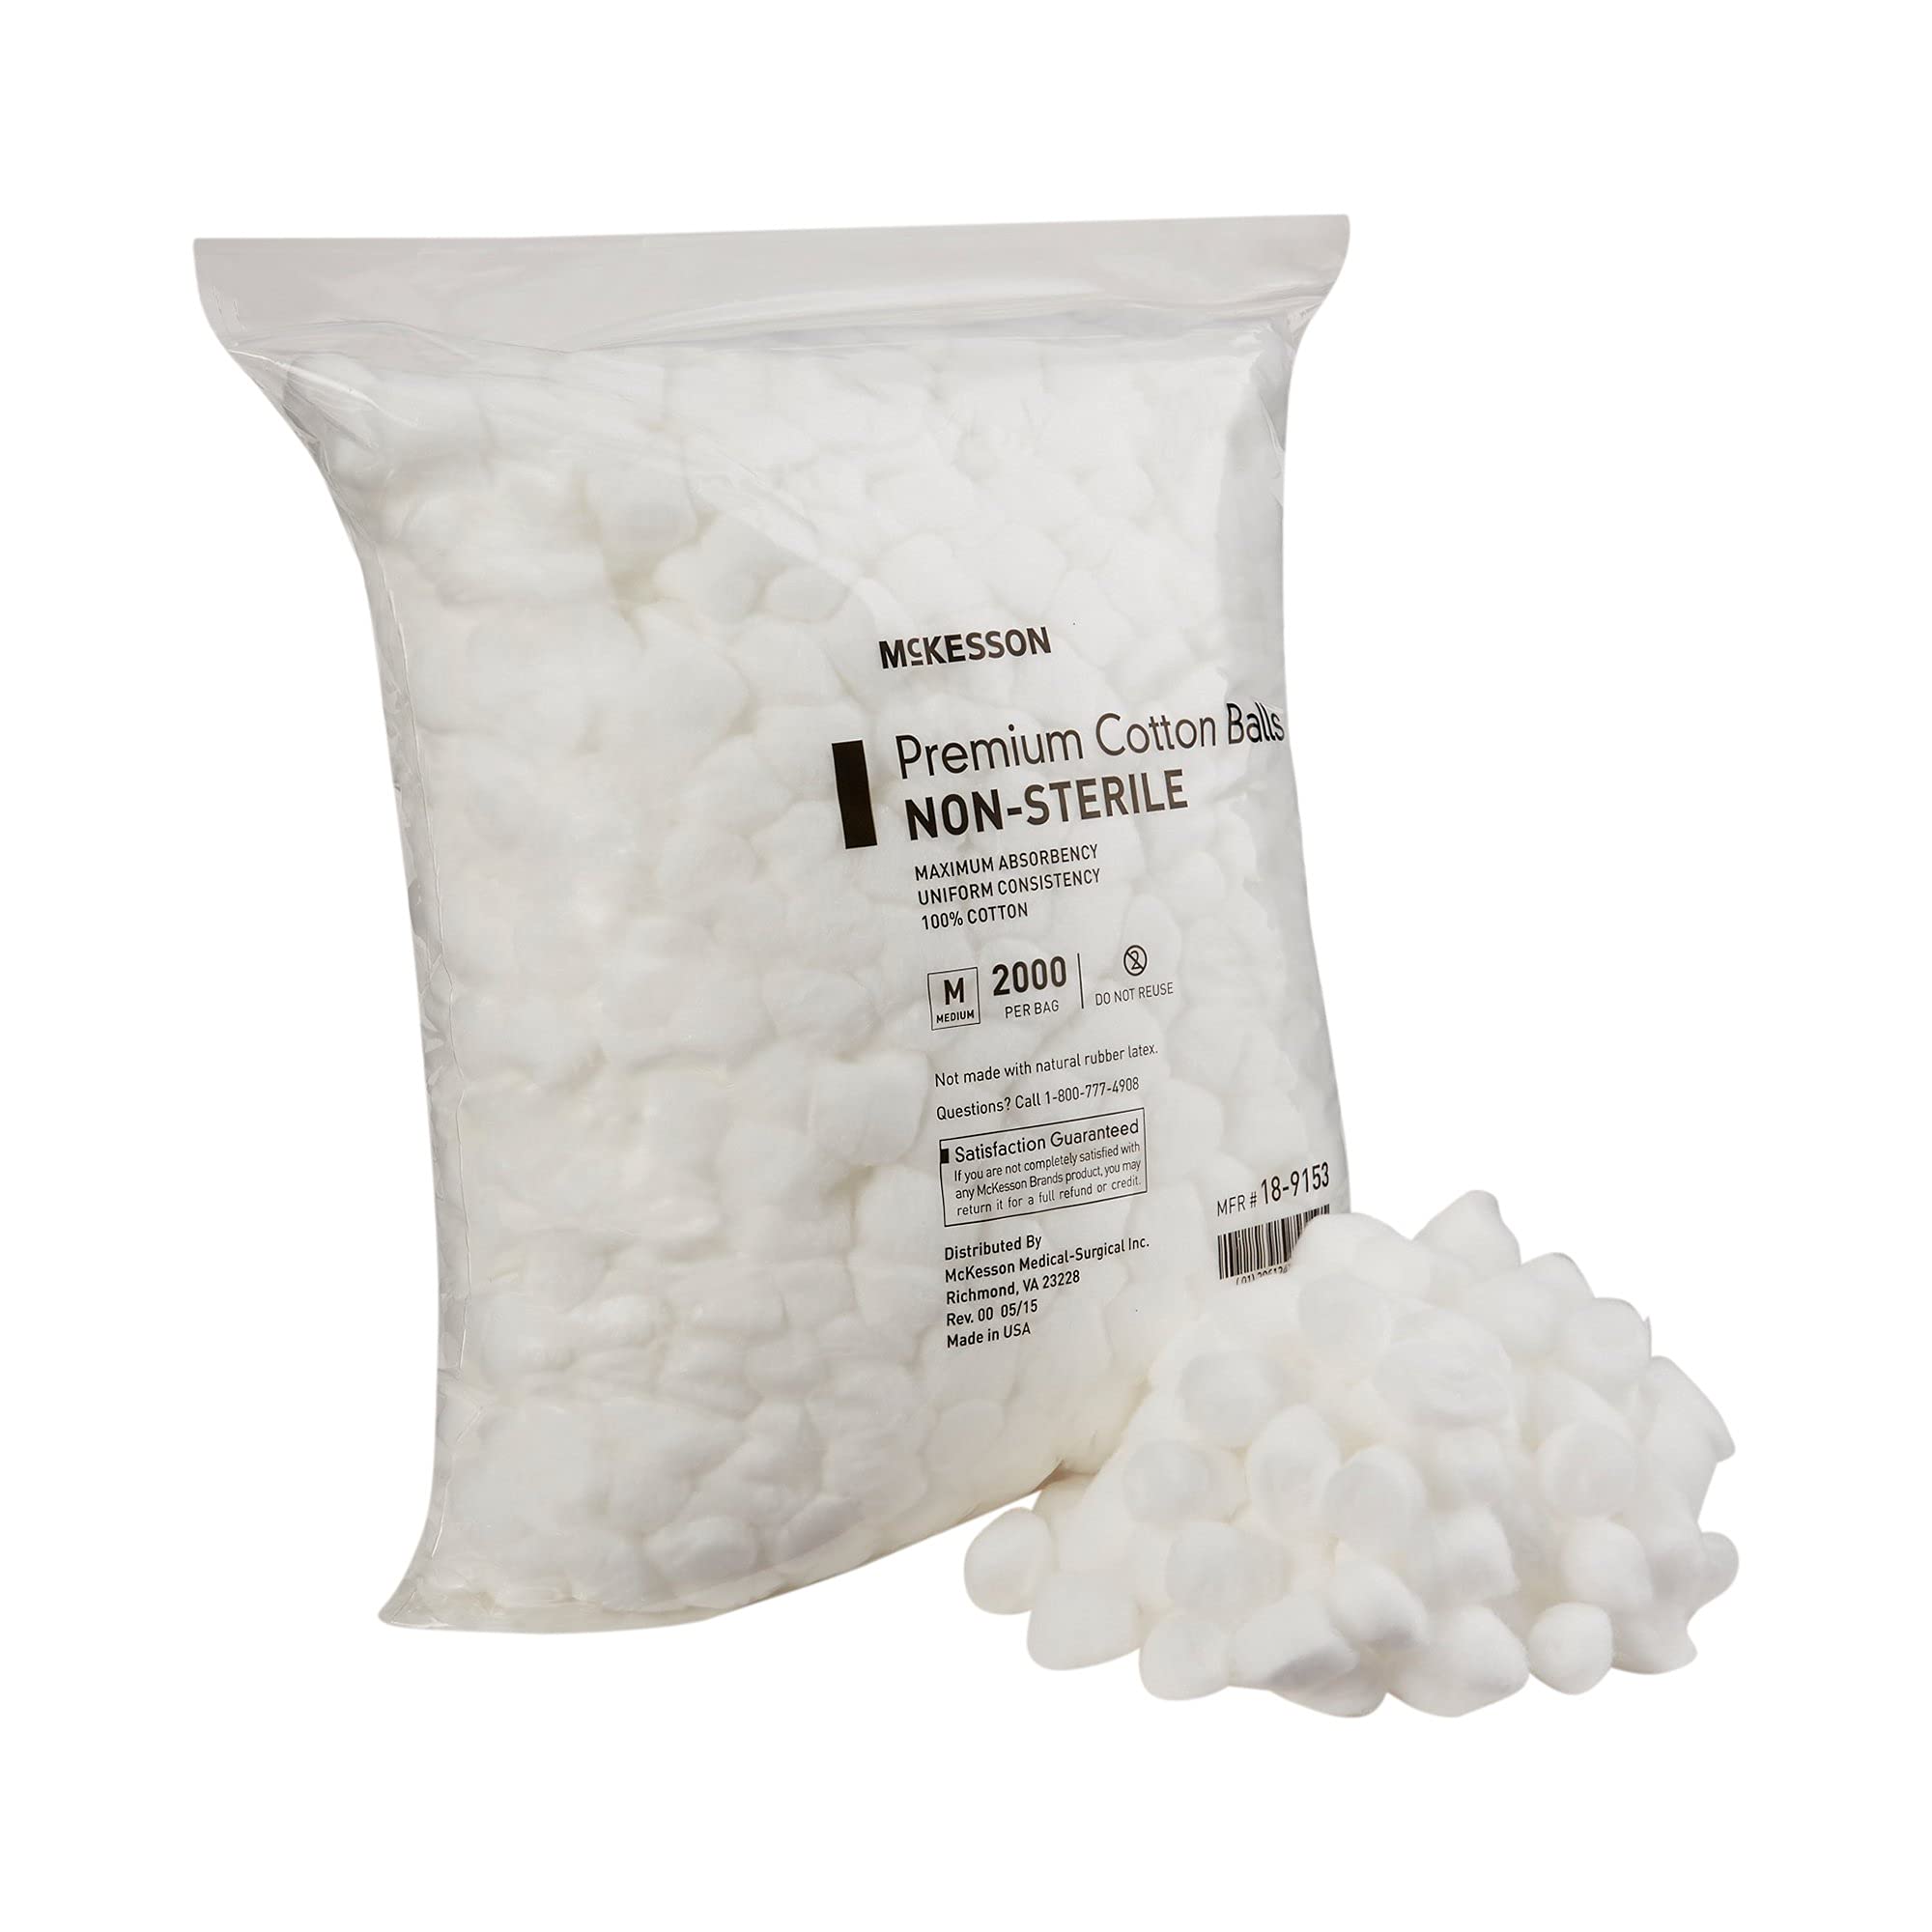 White Cotton Balls (Bag of 2000)